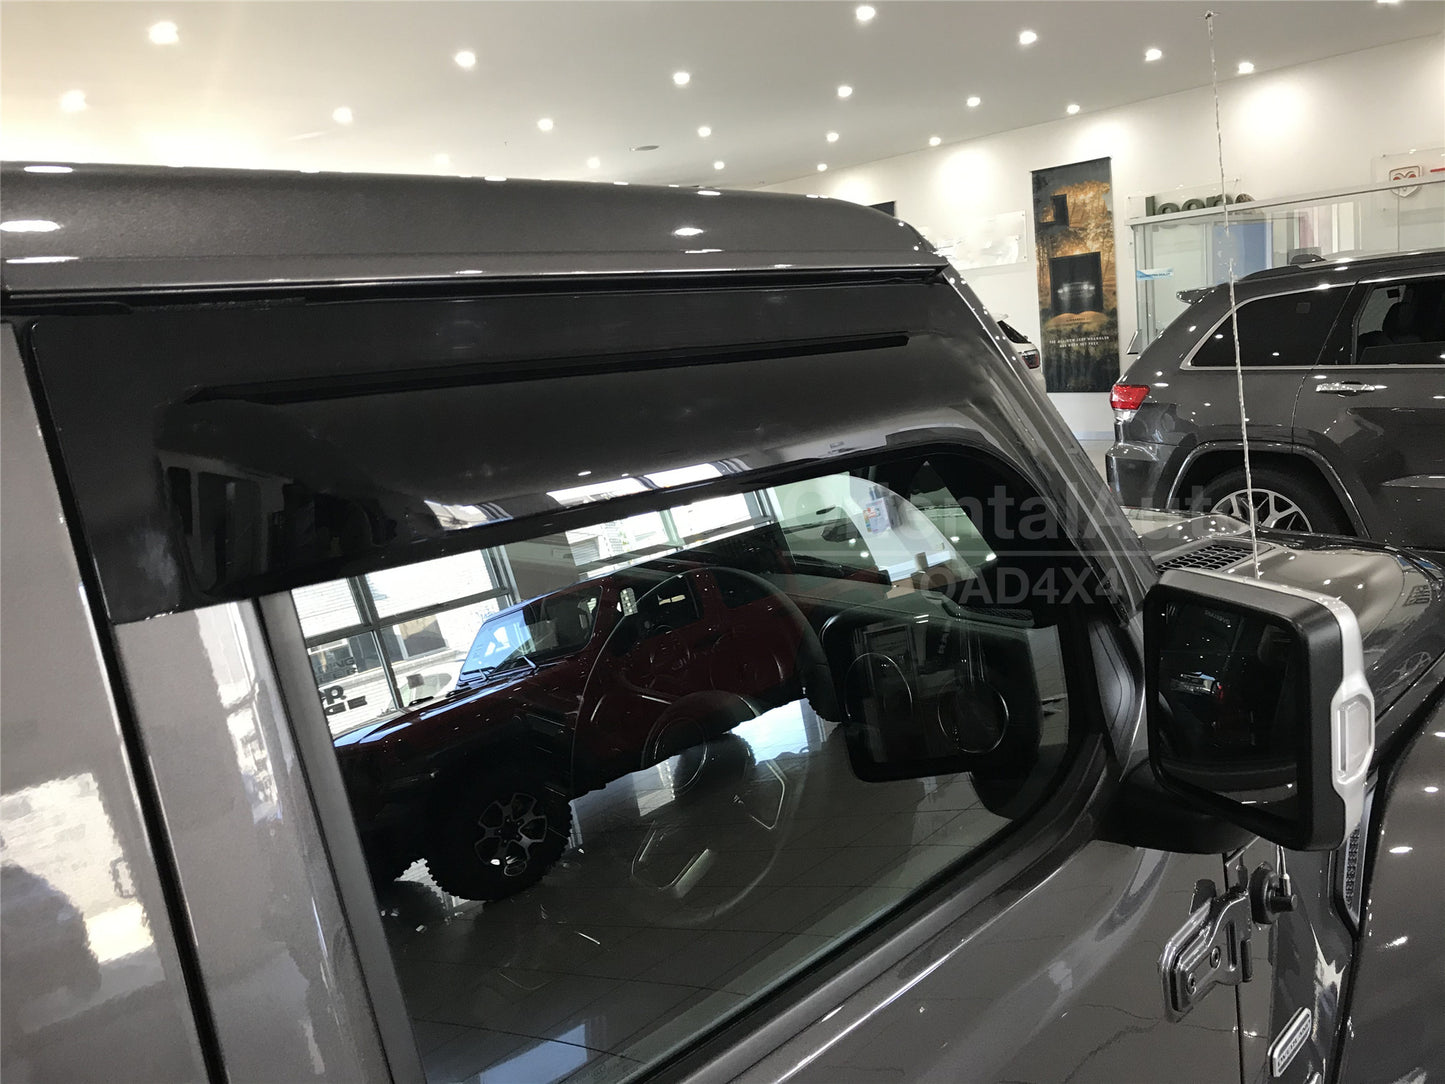 Widened Luxury 2pcs Weathershields For Jeep Wrangler JL 2 Door 2018+ Weather Shields Window Visor